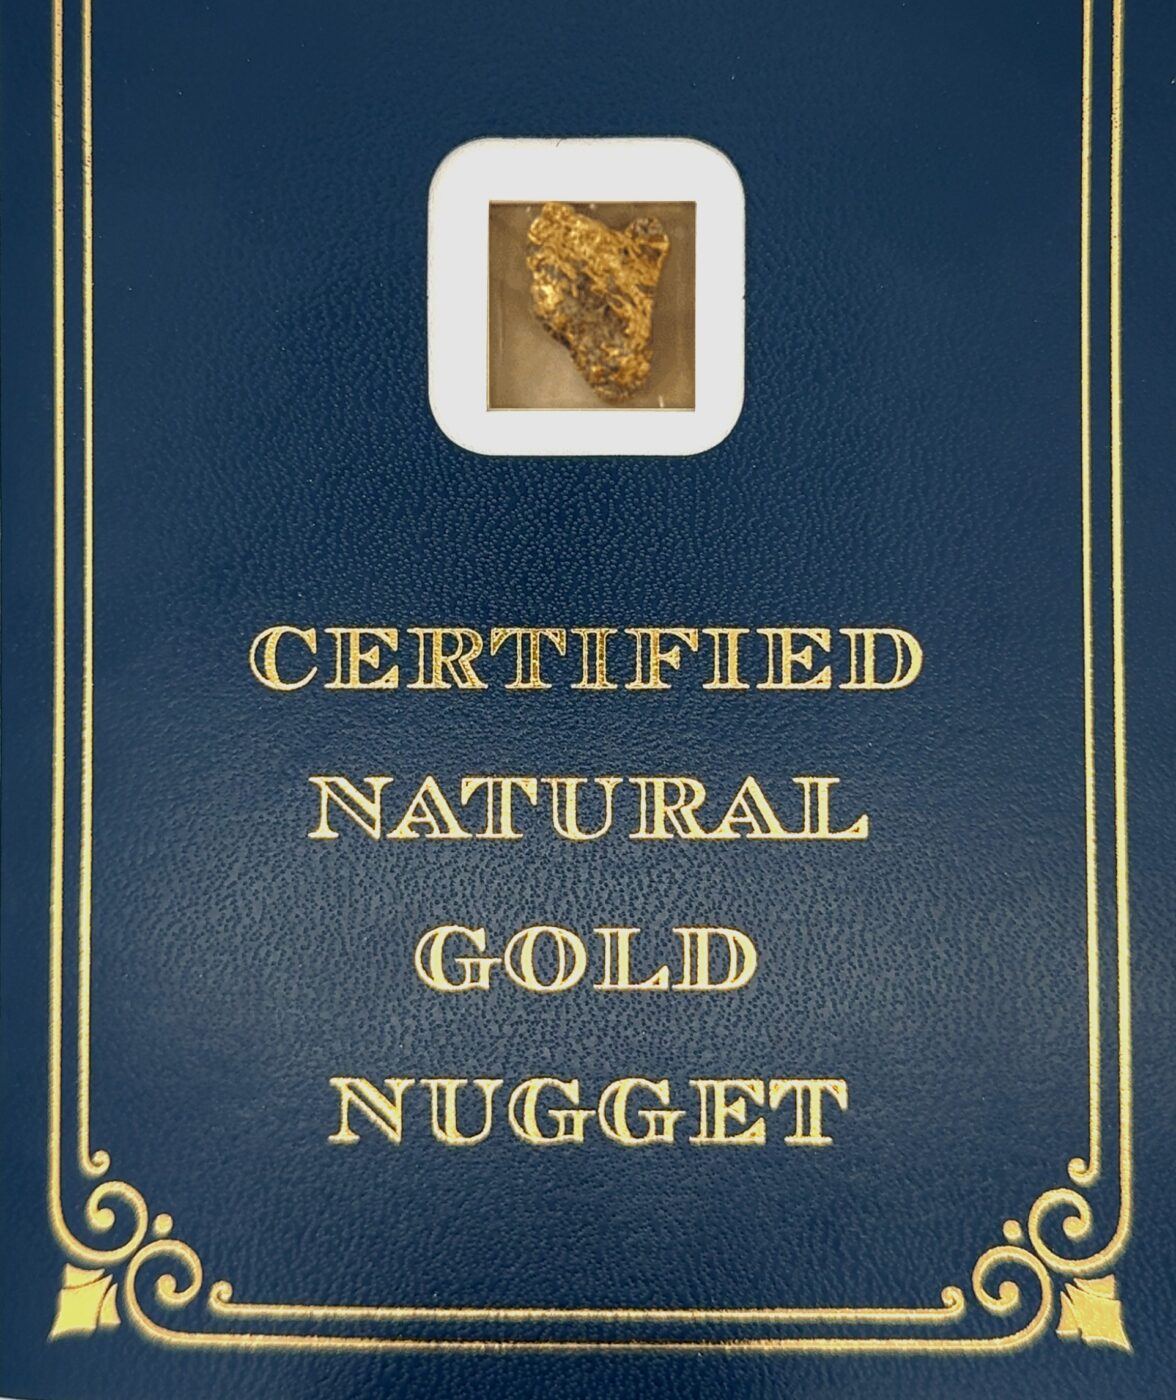 4.7 Gram Natural Gold Nugget from McGrath Alaska, Alaska Mint